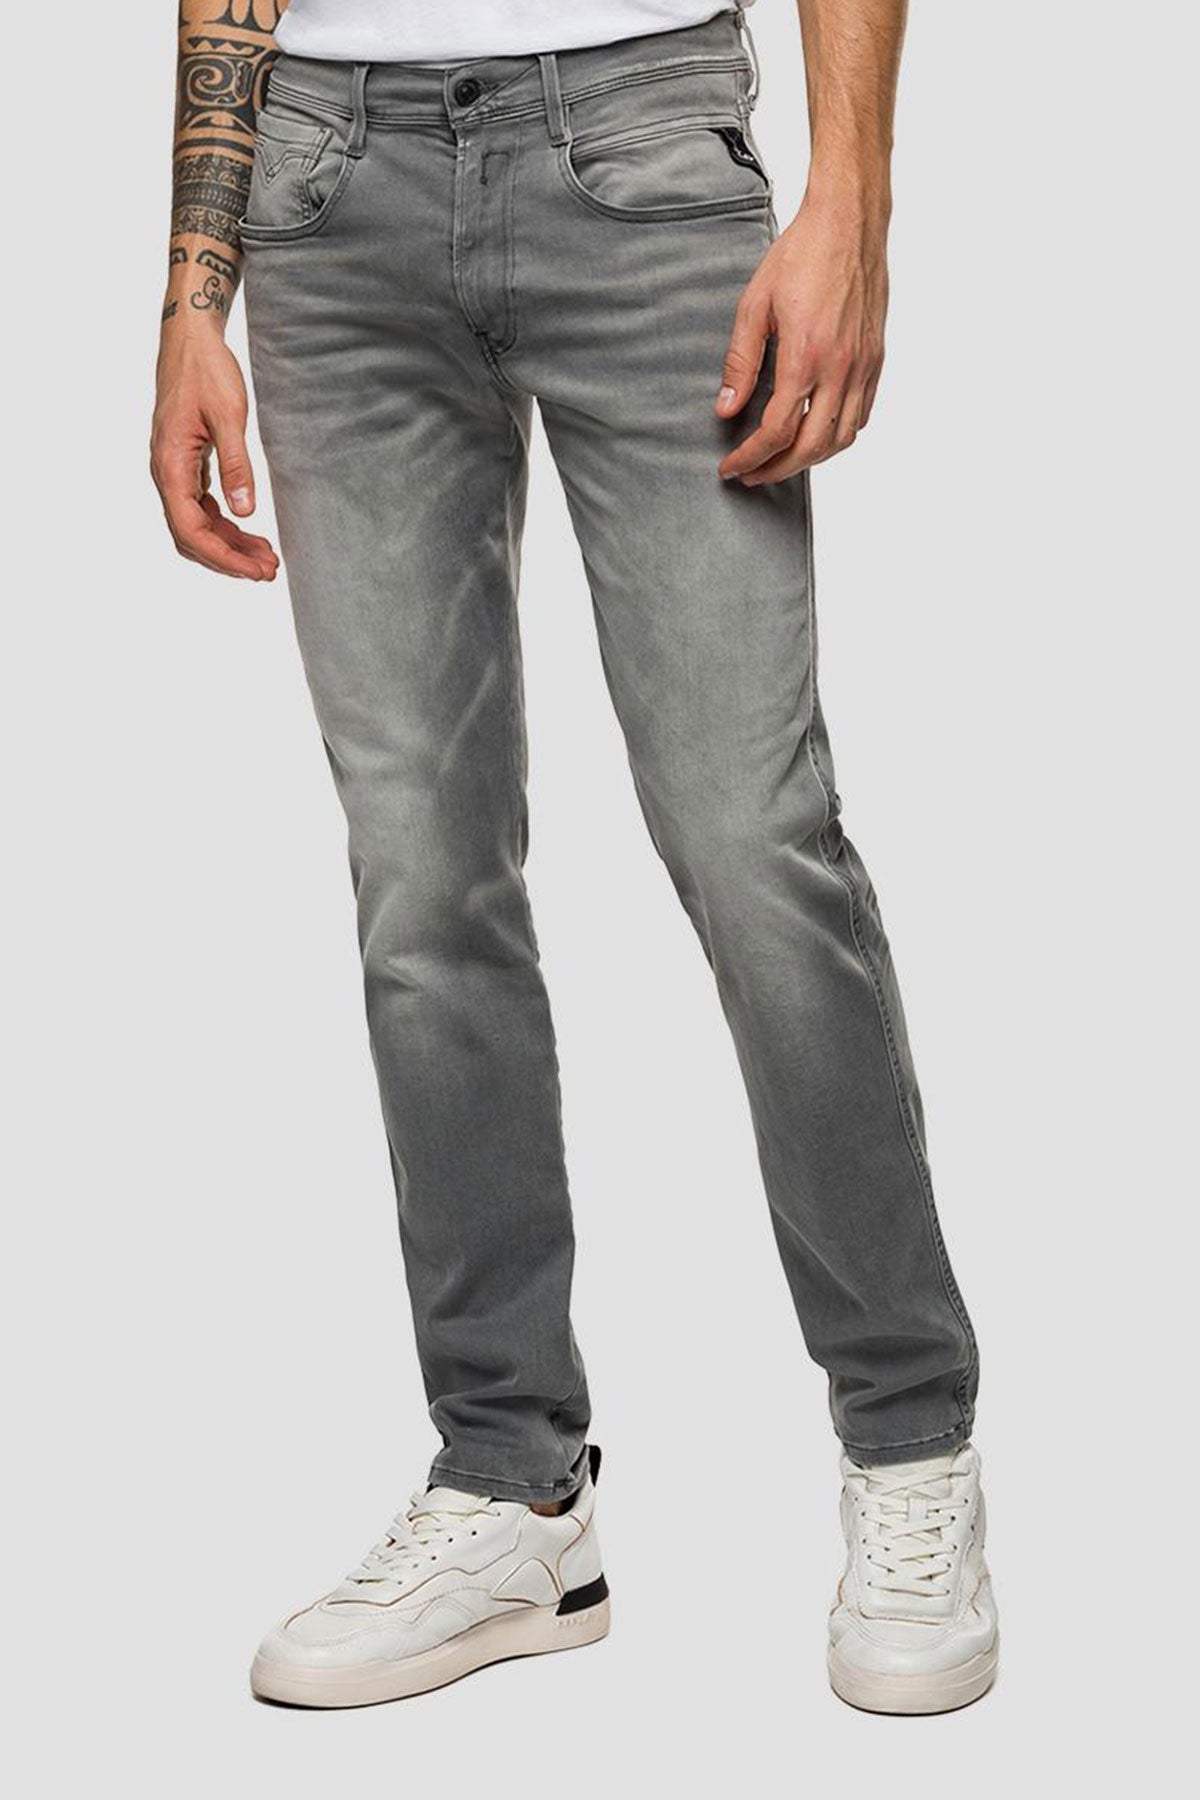 Replay Slim Fit Anbass Hyperflex Bio Jeans-Libas Trendy Fashion Store